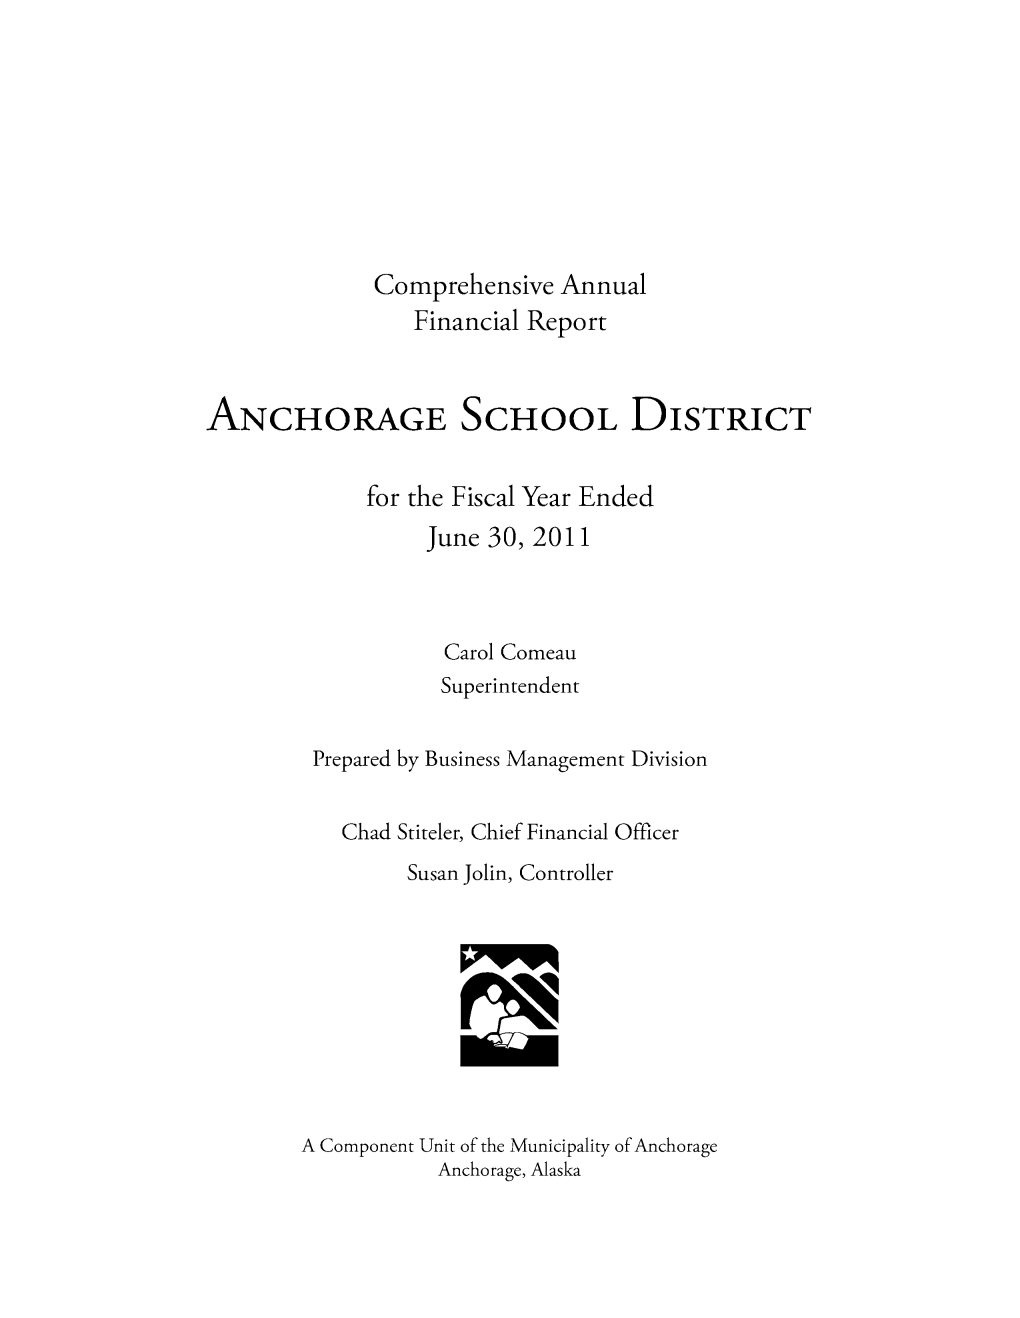 The Anchorage School Board's Vision